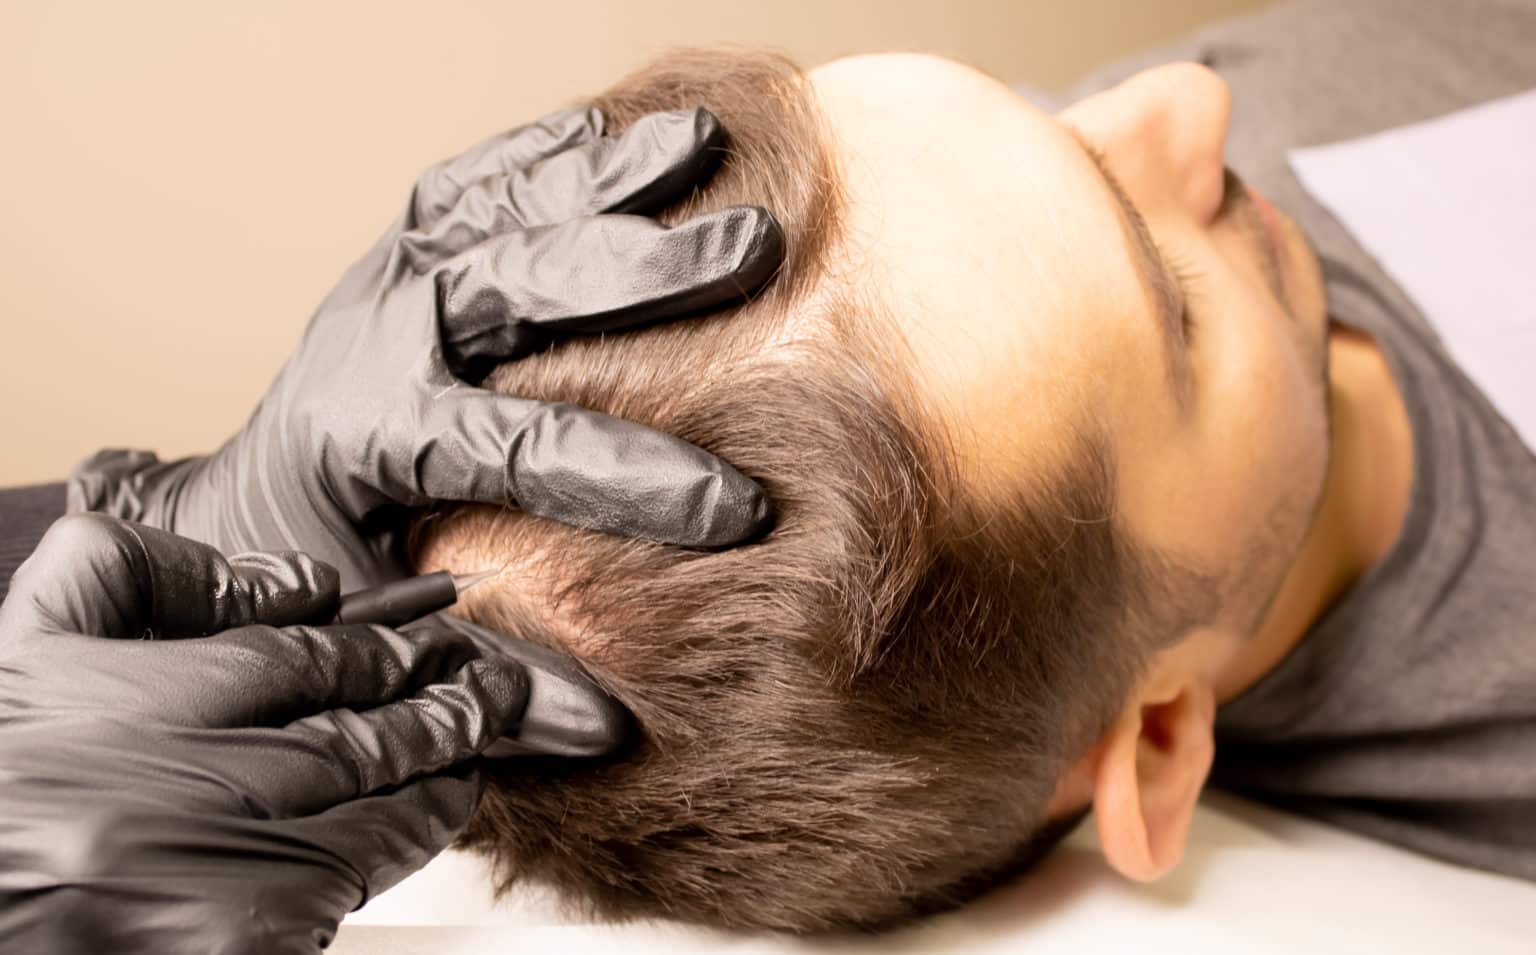 The Best Hair Restoration Method for Men In 2021 - Robb Report